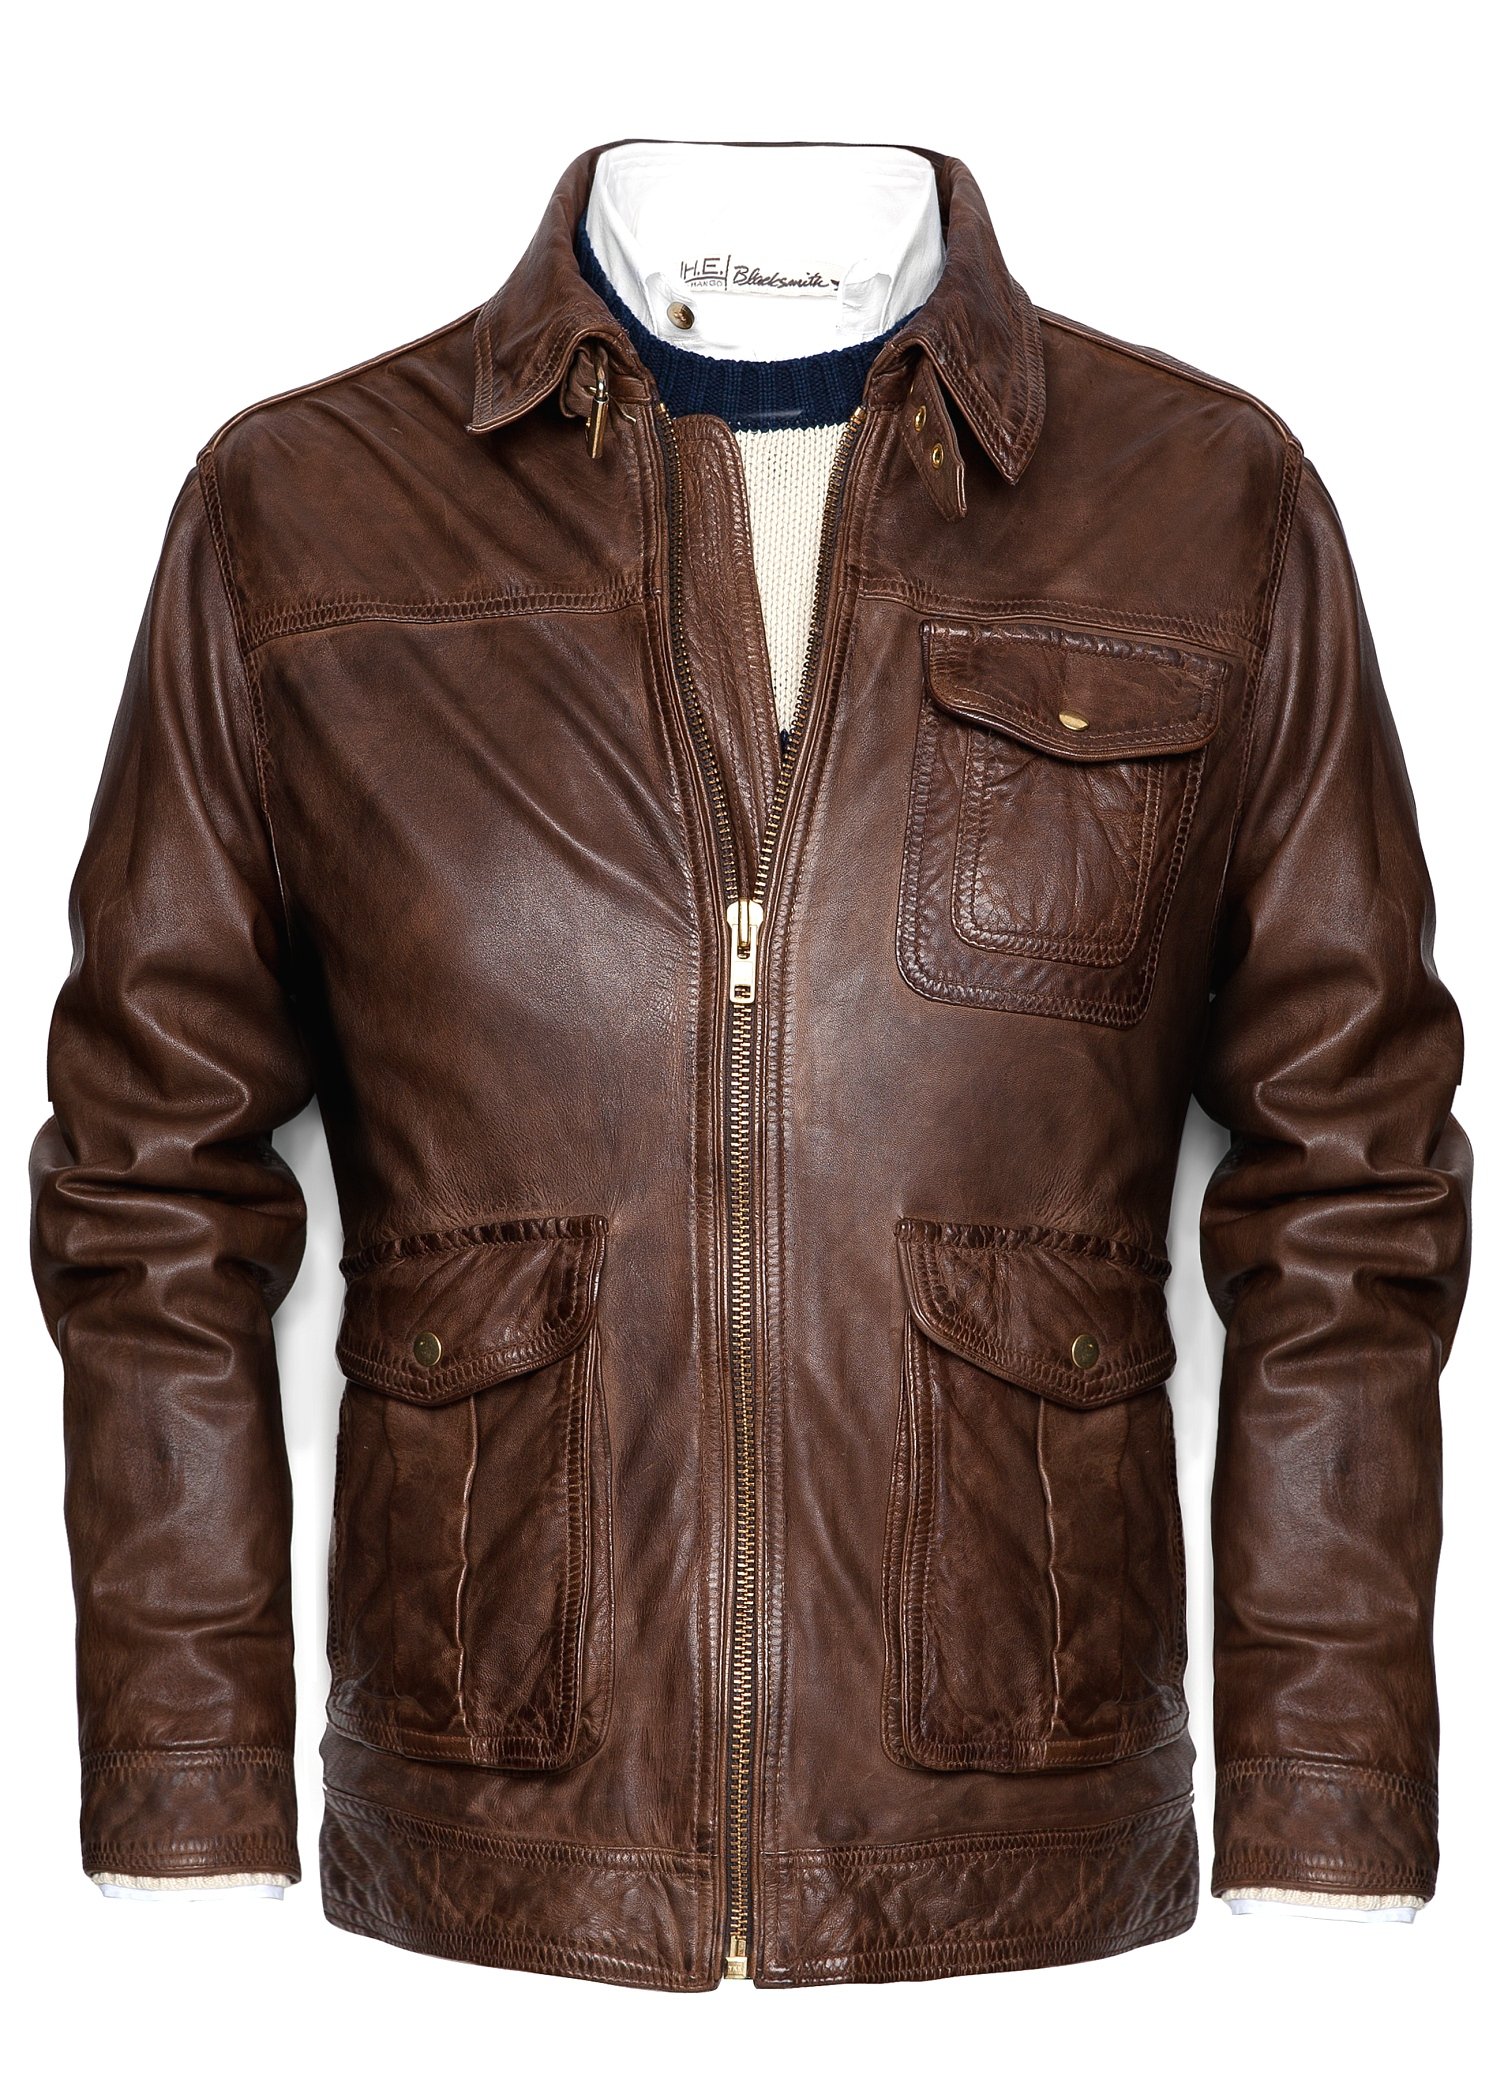 Lyst - Mango Vintage Leather Jacket in Brown for Men